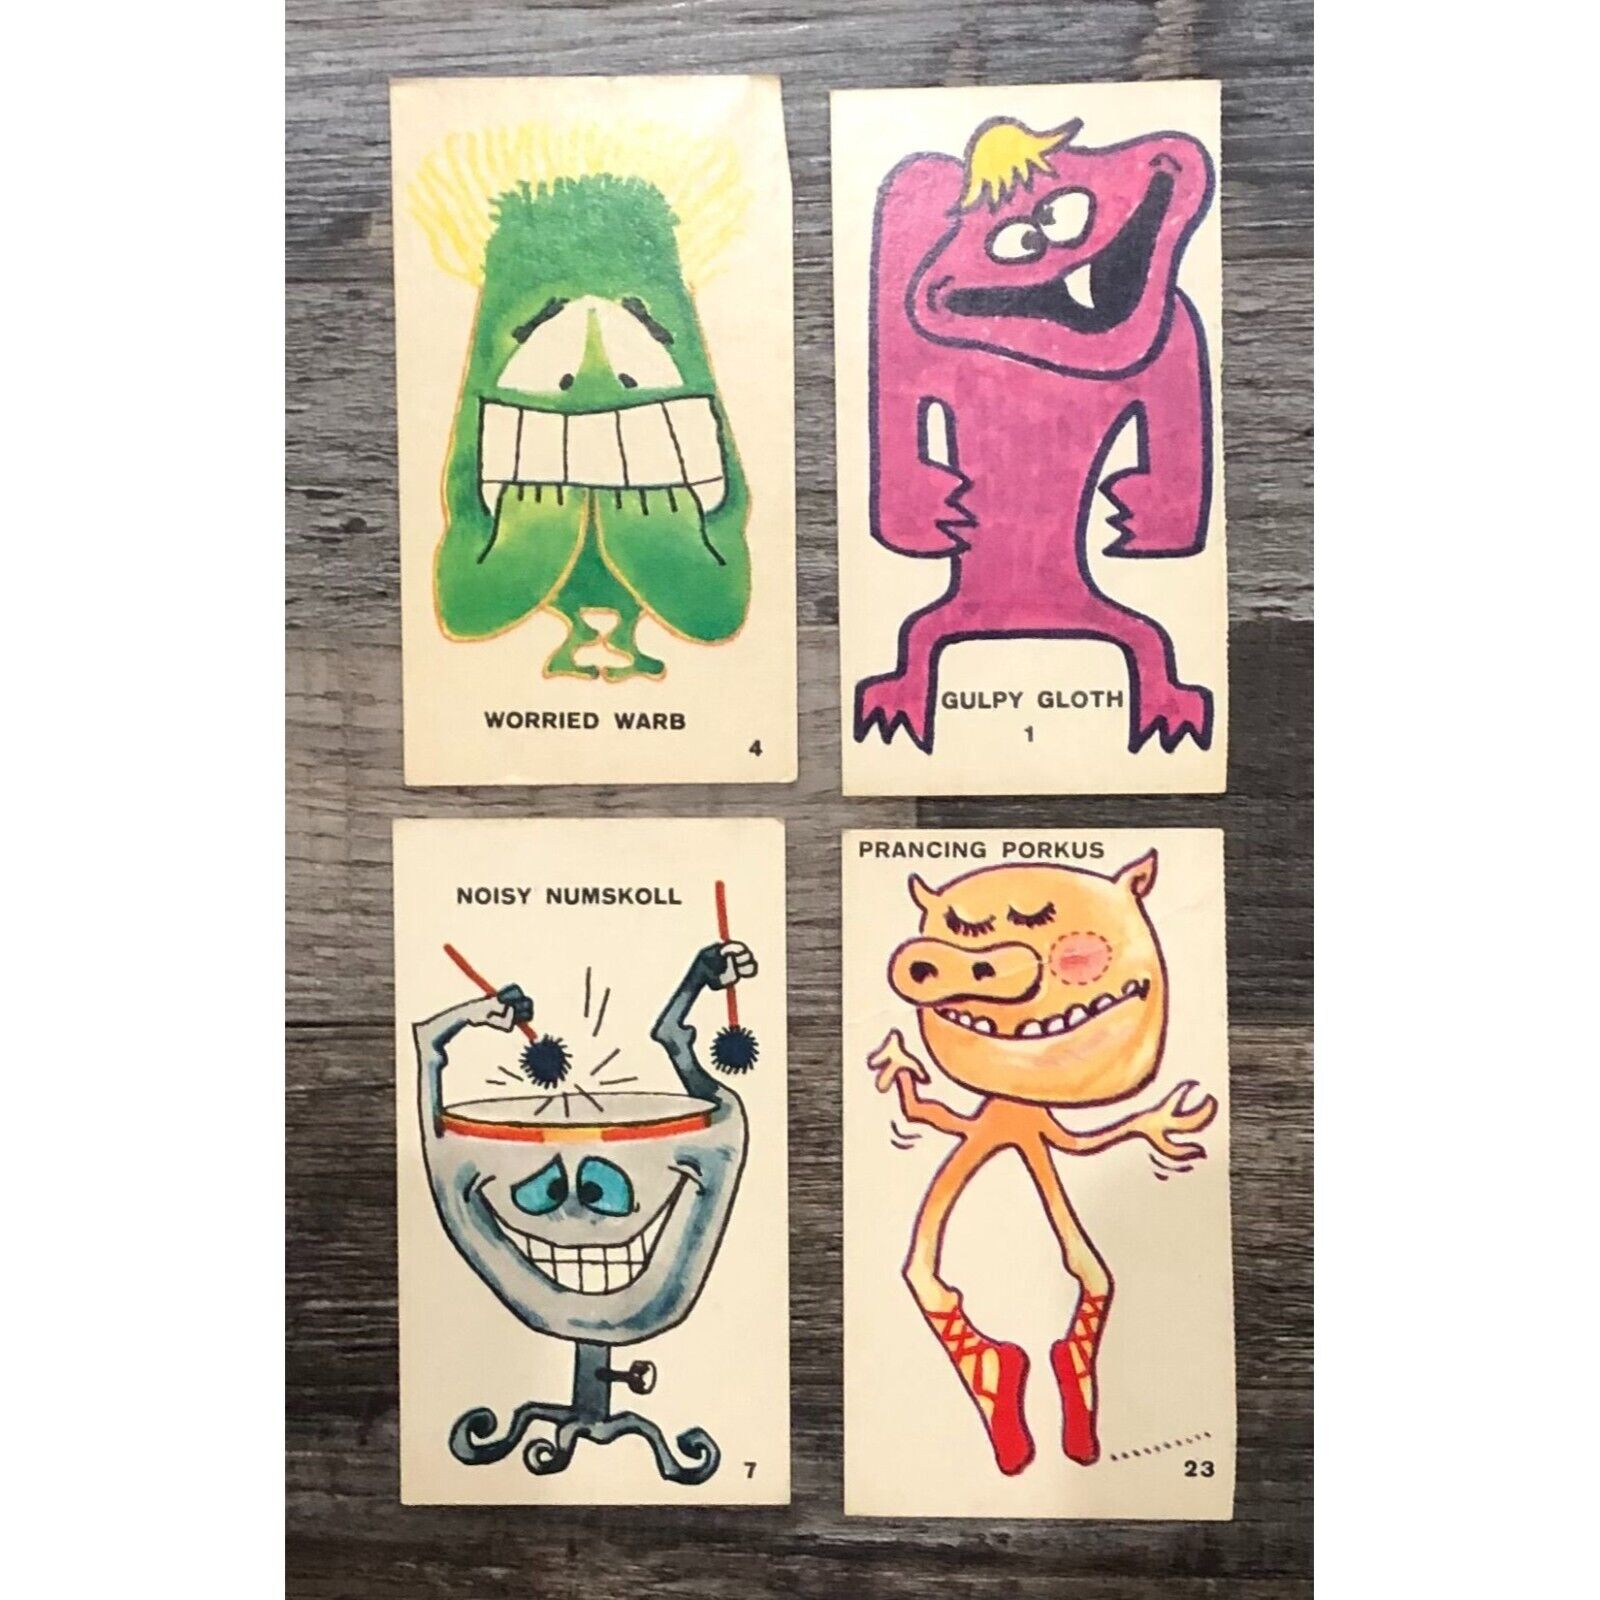 Vtg 1966 Nestle Monster Trading Card Lot of 4 Worried Warb Gulpy Gloth Numskoll